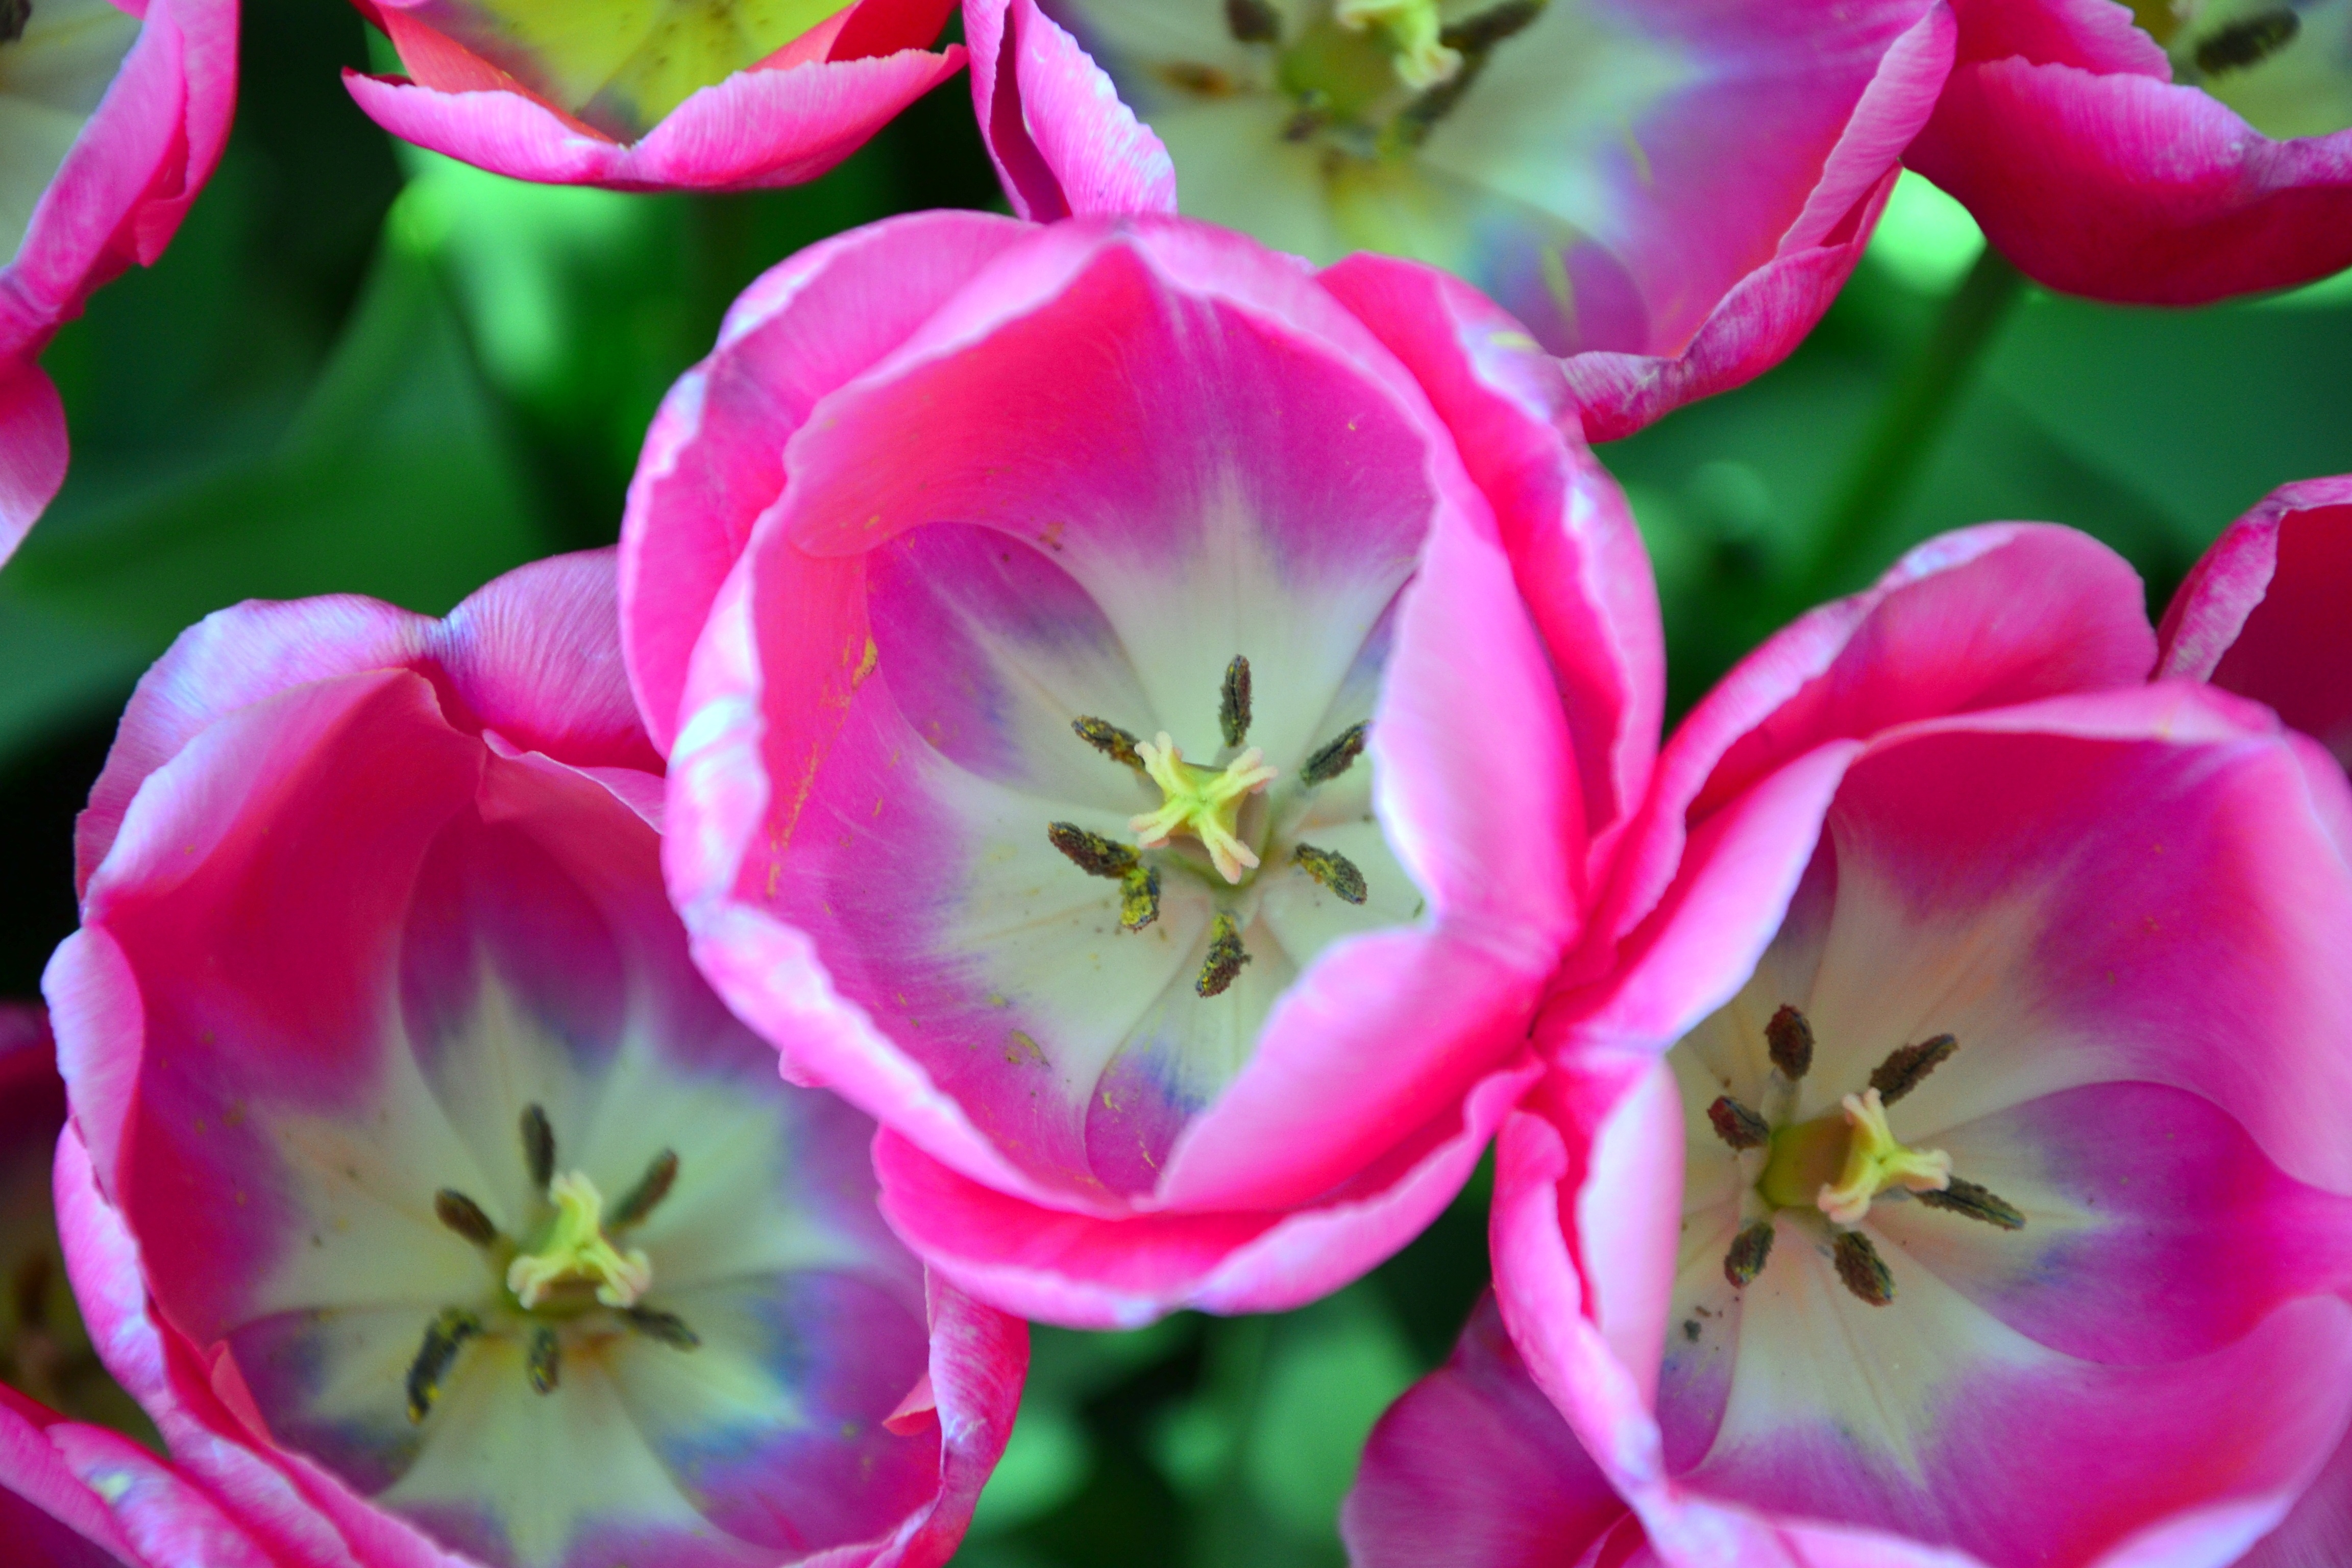 Opened pink tulips